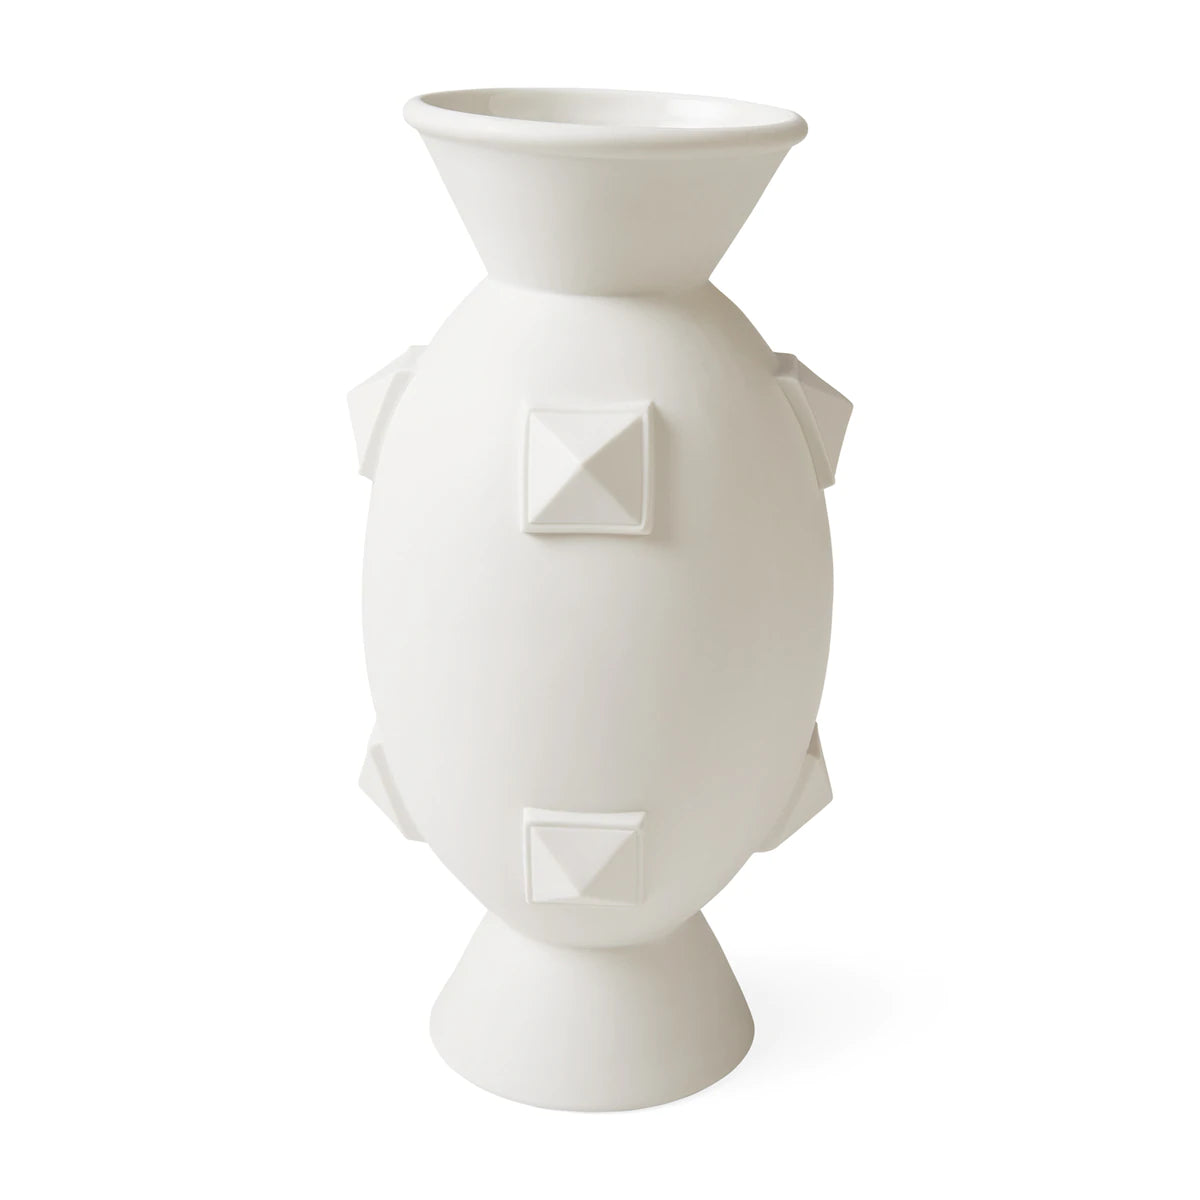 Charade Bowtie Vase by Jonathan Adler